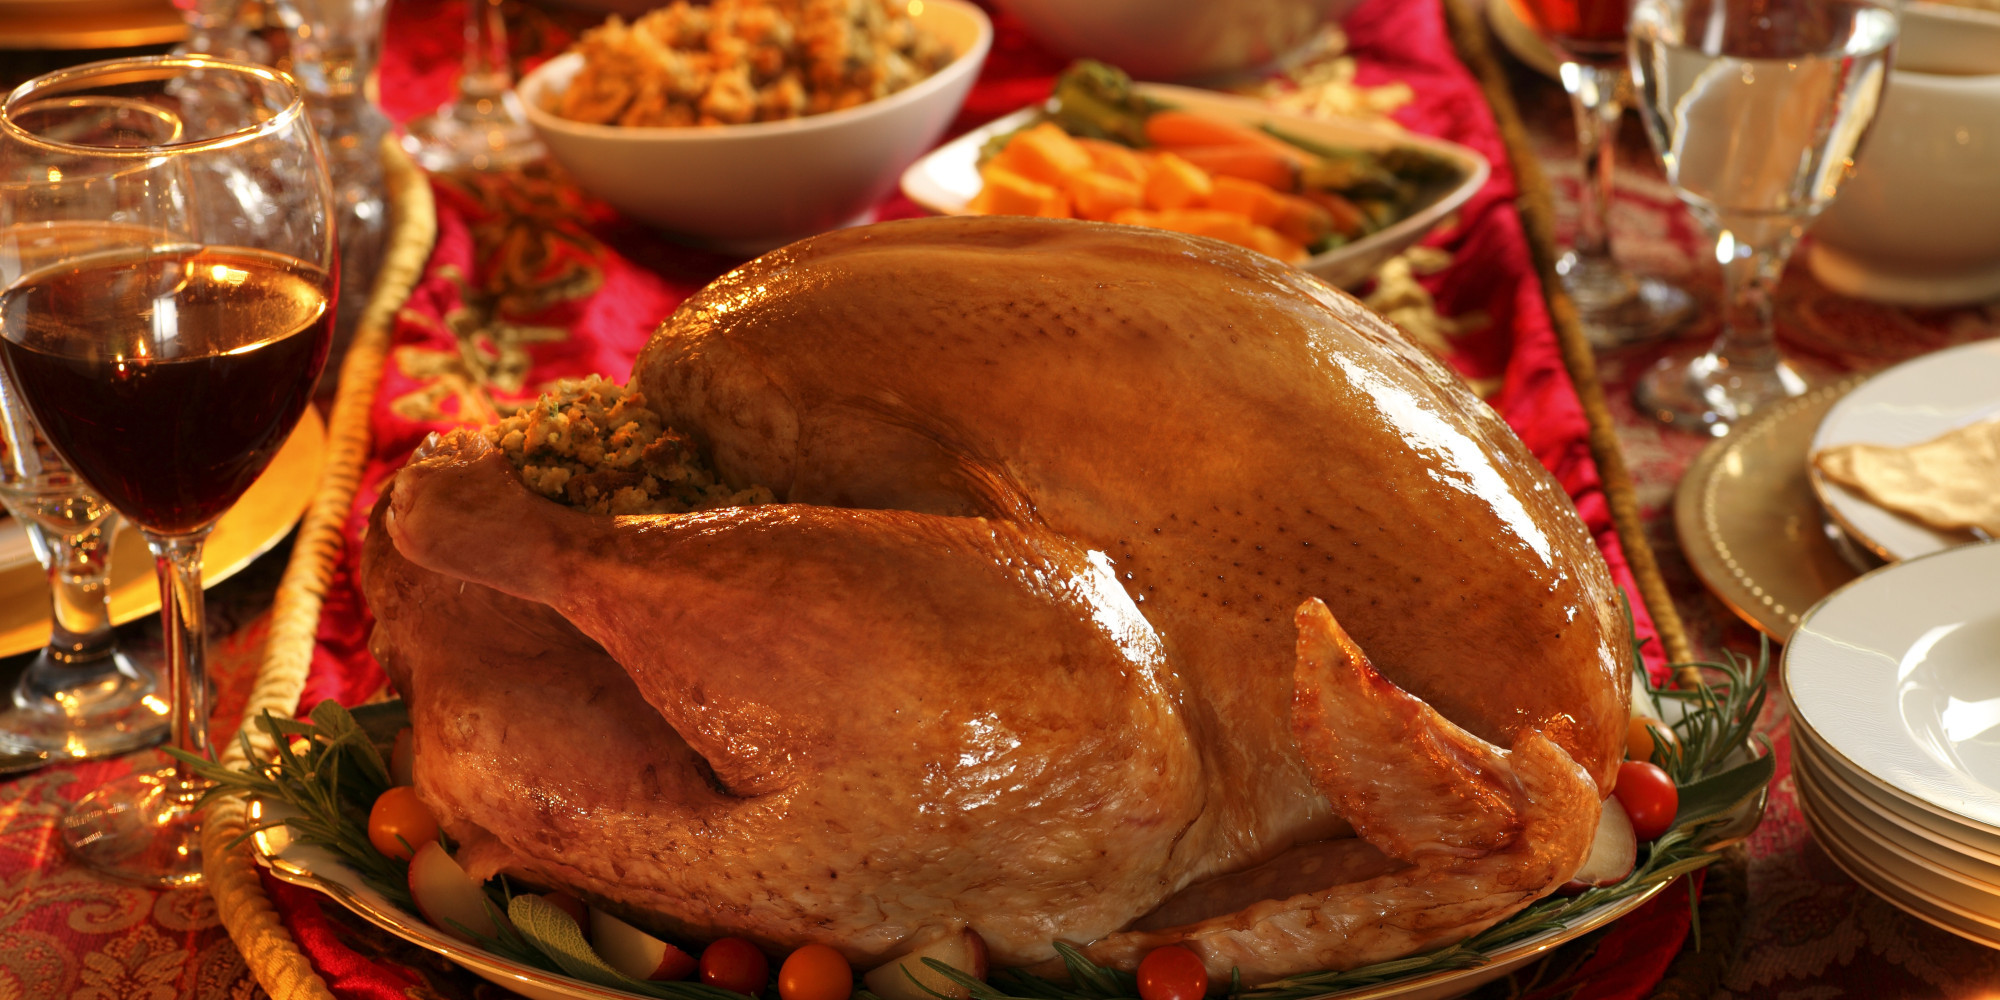 Restaurants Serving Thanksgiving Dinner
 Can’t Cook R4L s Top 5 Restaurants Serving Thanksgiving